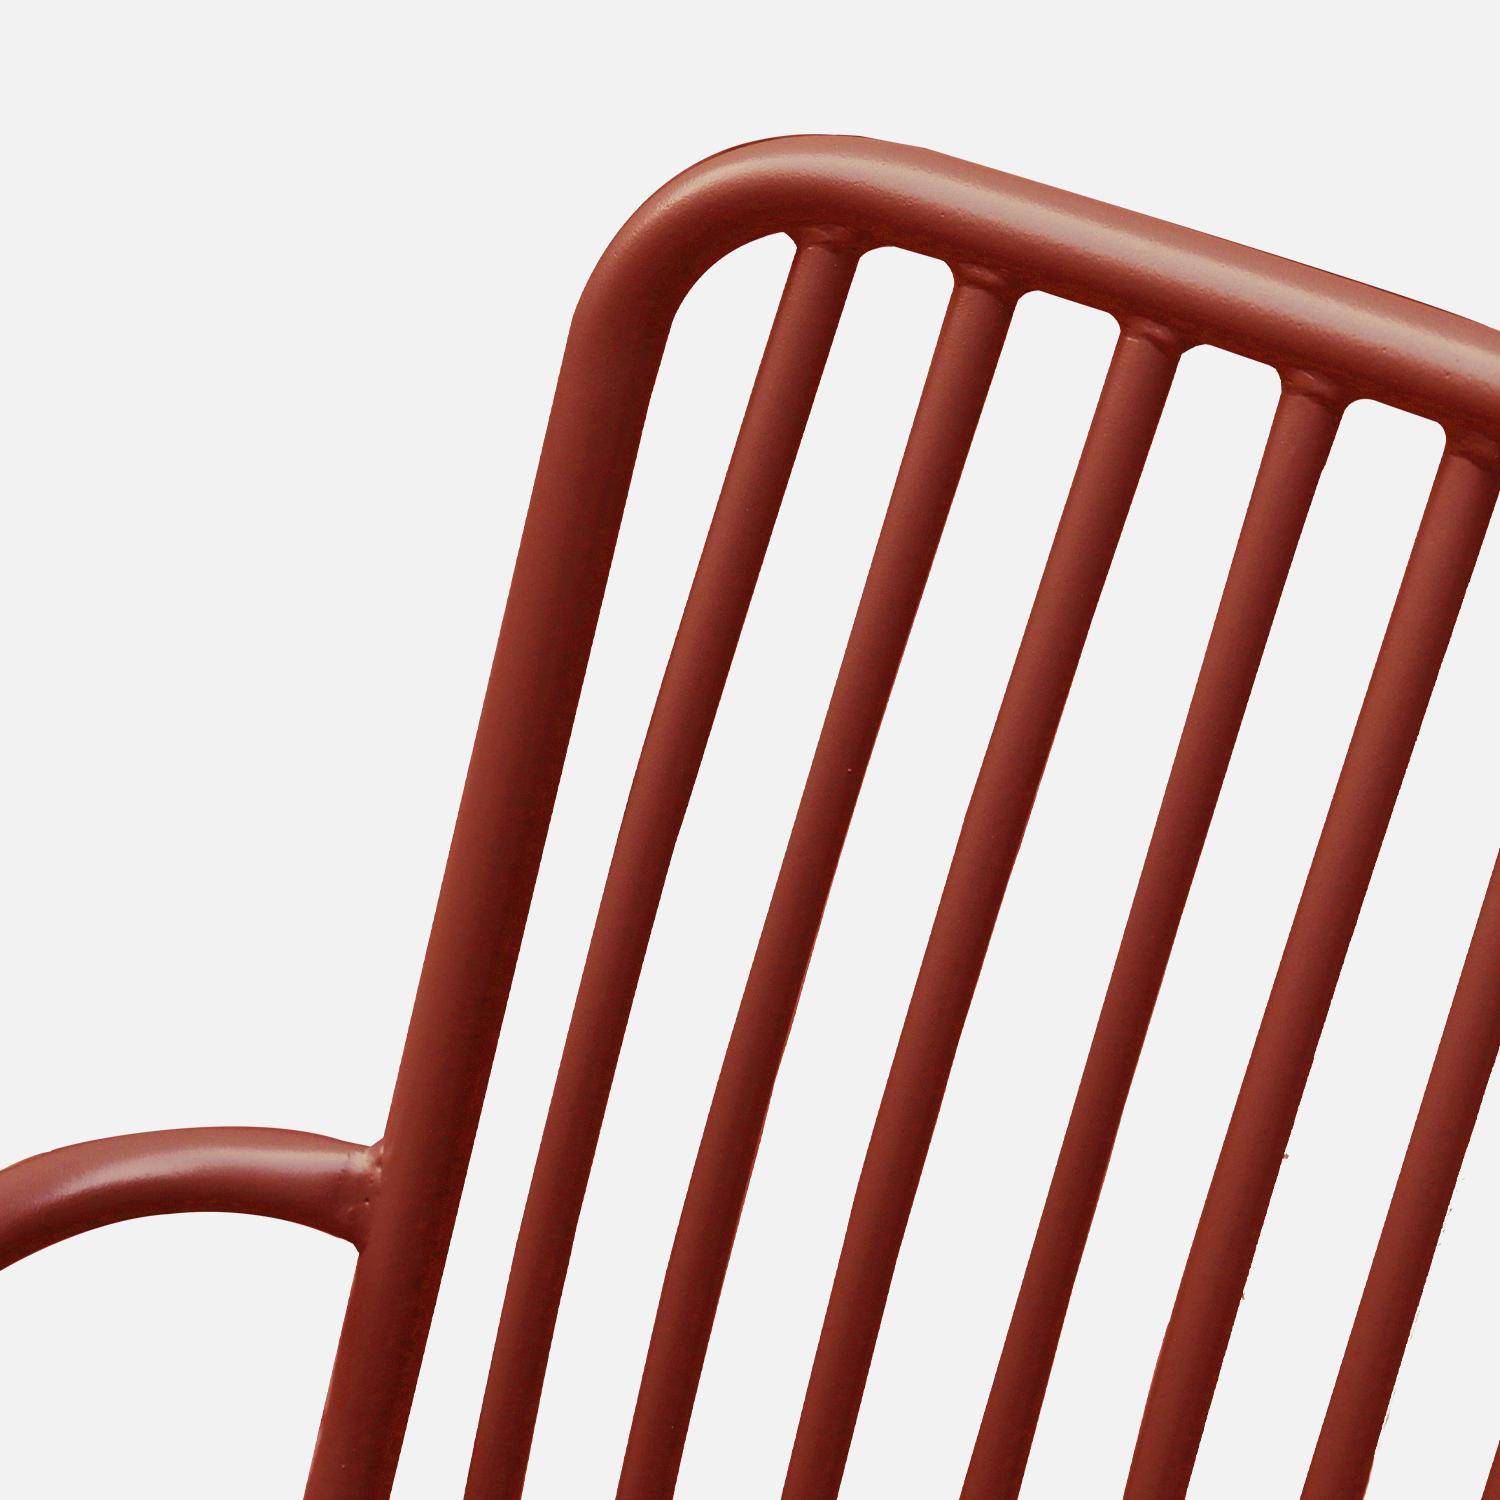 2er Set stapelbare terrakottafarbene Stühle aus Stahl, mit Armlehnen - Florida,sweeek,Photo7